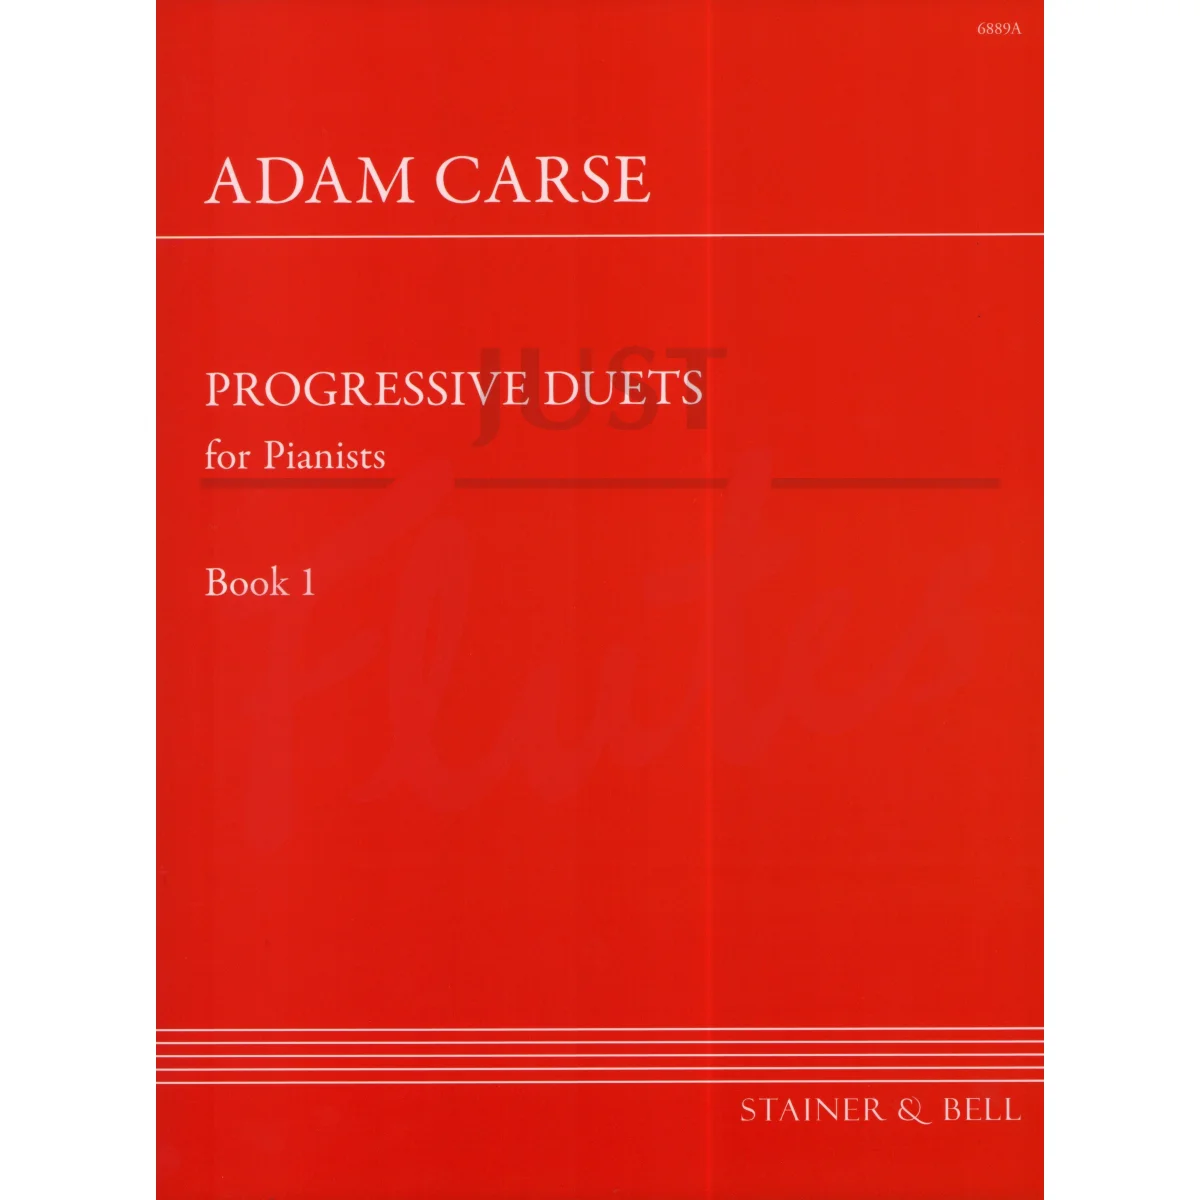 Progressive Duets for Pianists Book 1